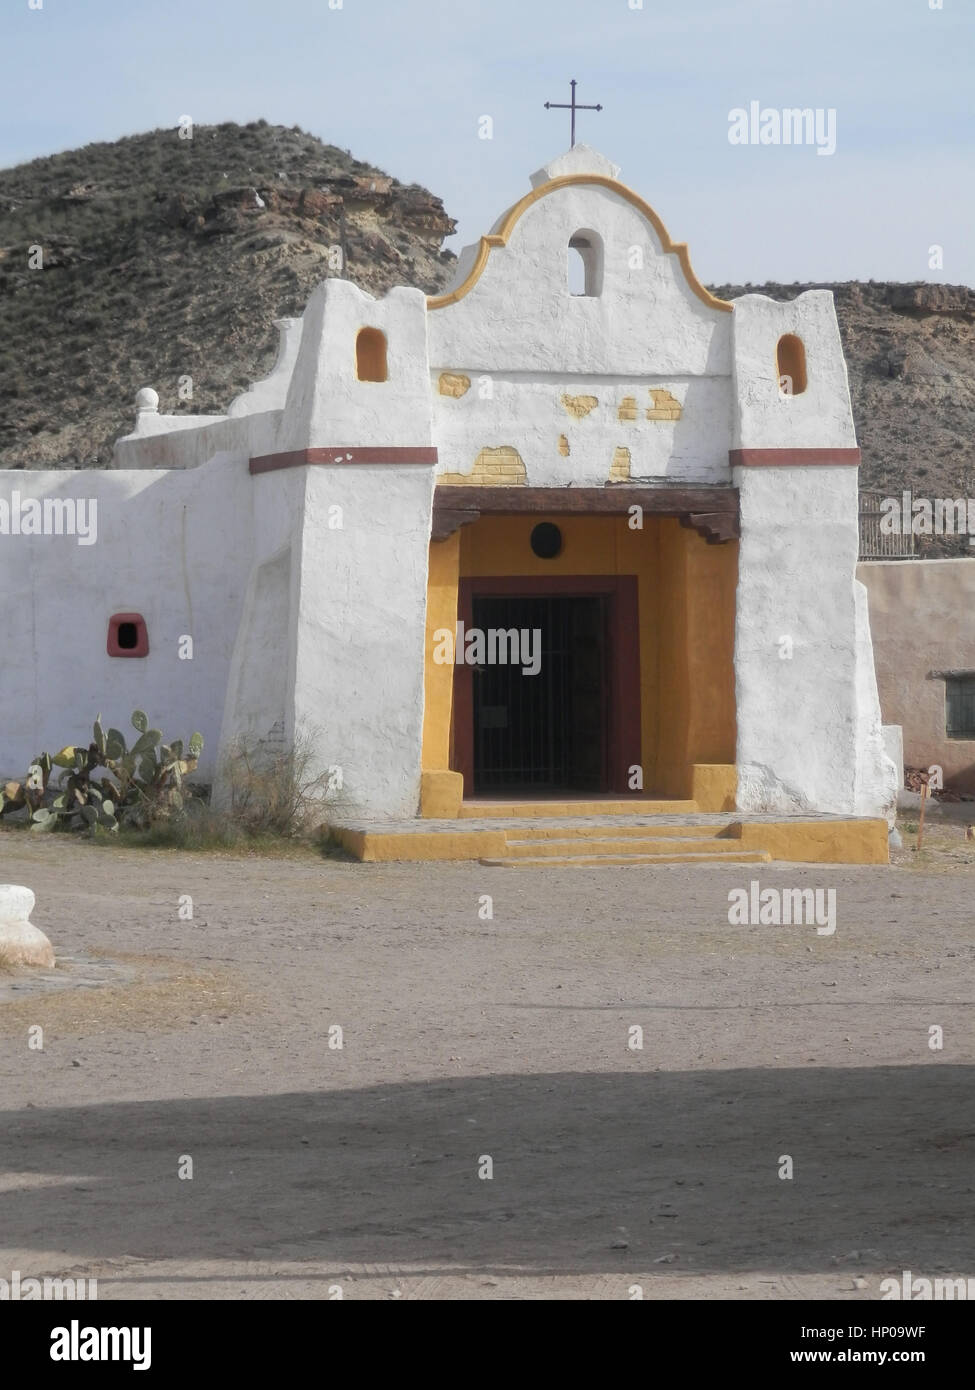 Mexican style Church Building in Fort Bravo Film Set, Tabernas Desert, Almeria, Spain Stock Photo